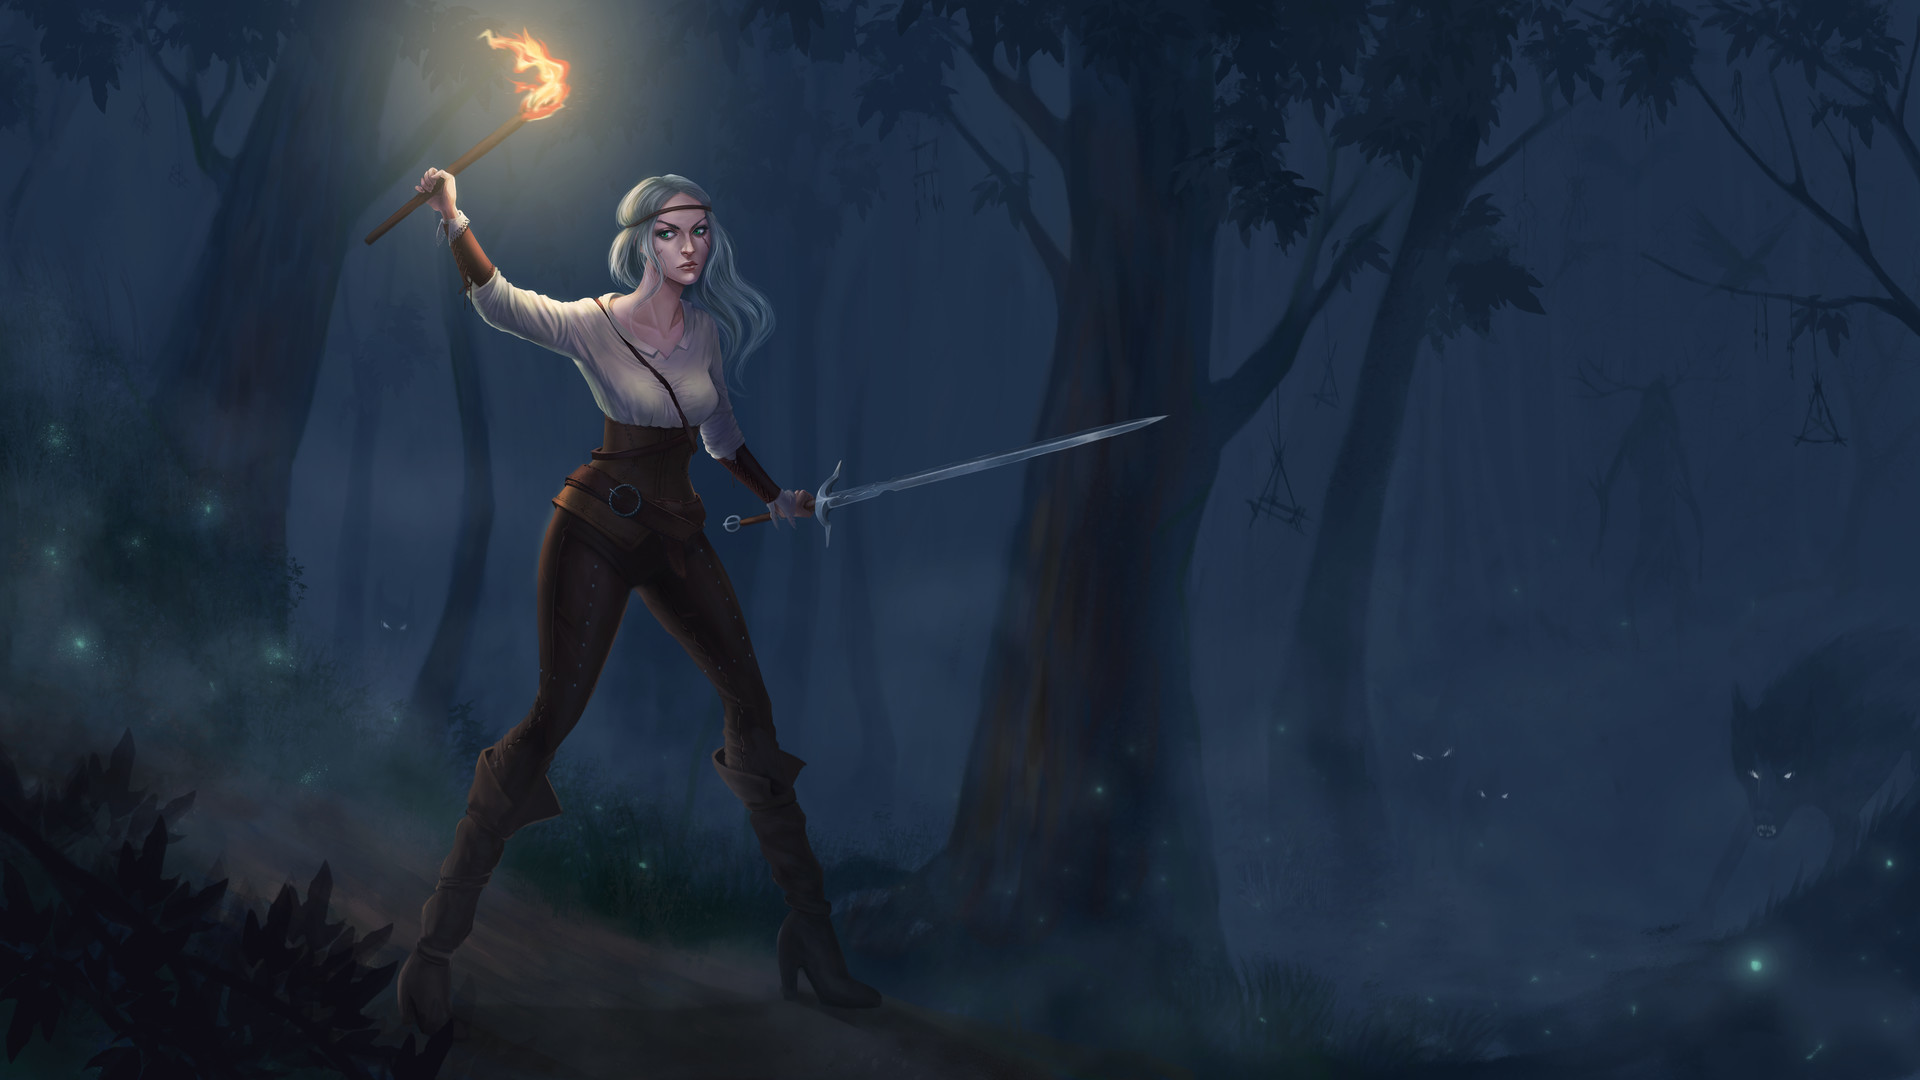 Cirilla Fiona Elen Riannon, The Witcher 3: Wild Hunt, Artwork, Fantasy art, Fantasy girl, The Witcher, Fan art Wallpaper